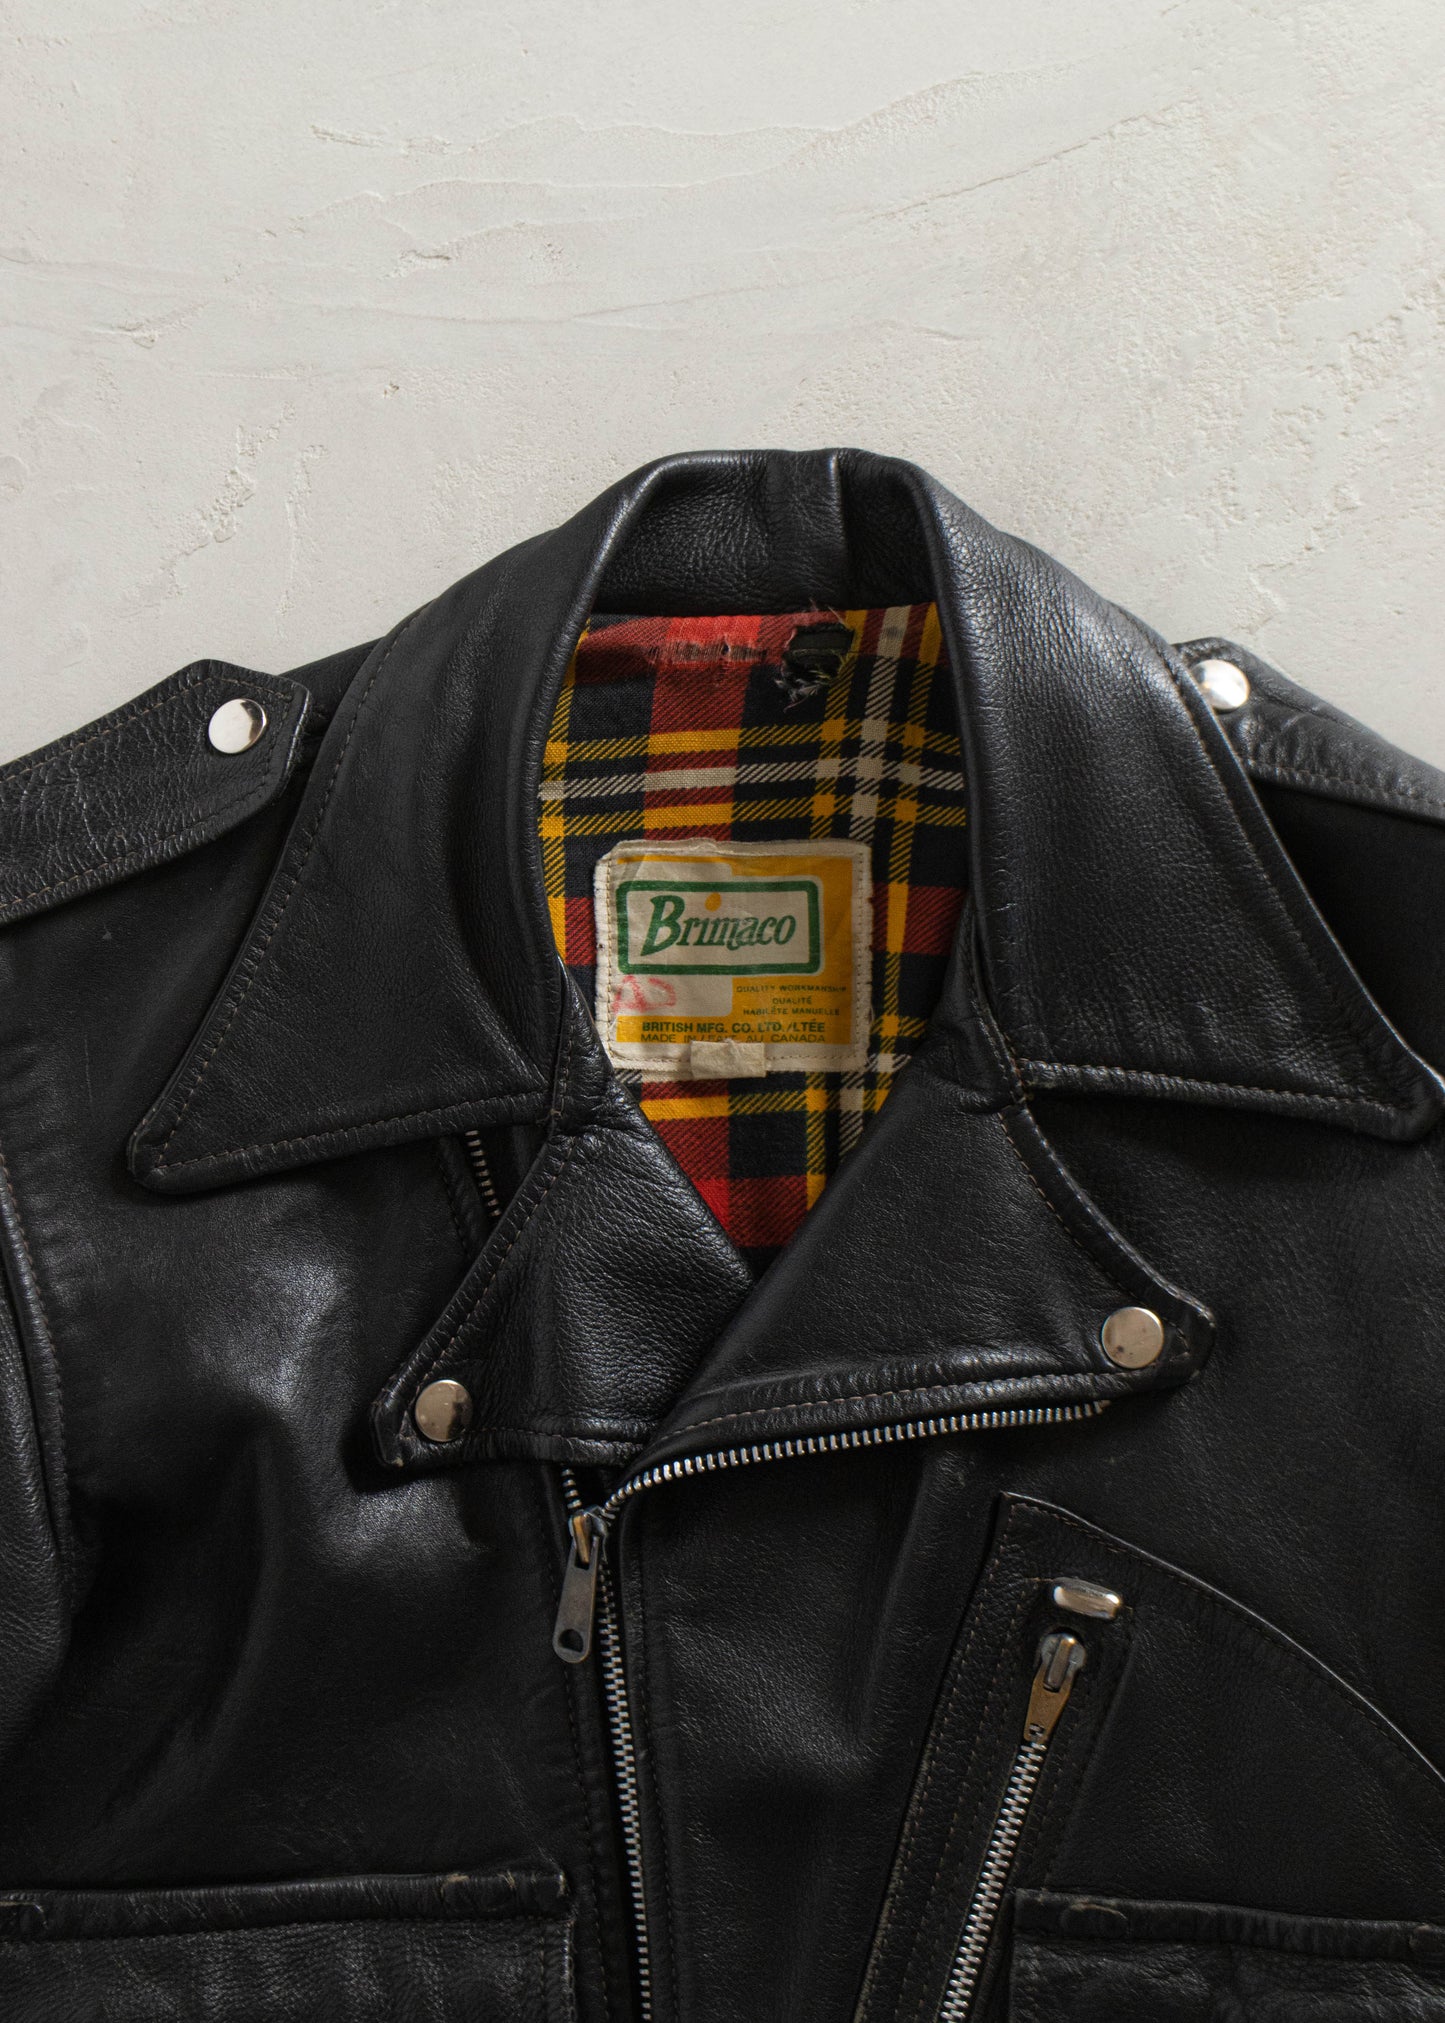 1970s Brimaco Leather Moto Perfecto Jacket Size XS/S